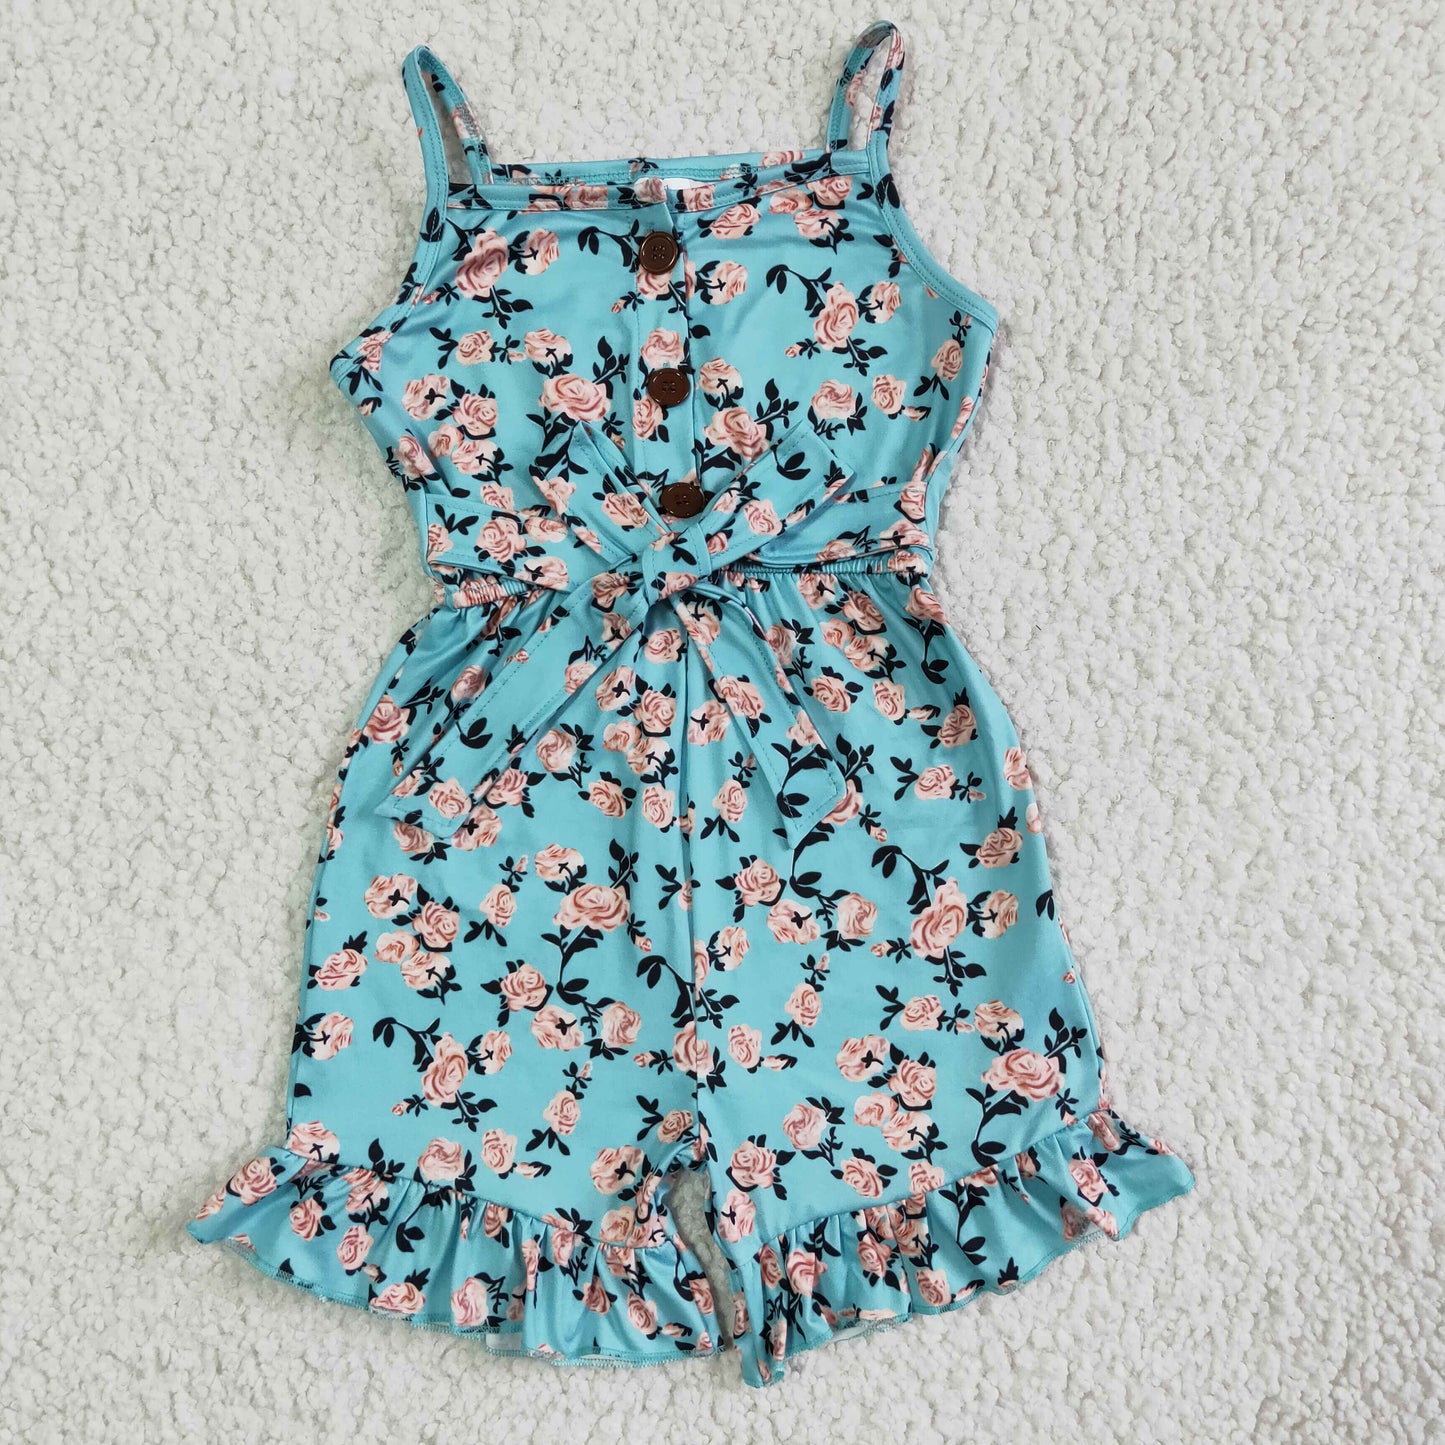 Blue floral sleeveless baby girls summer jumpsuit